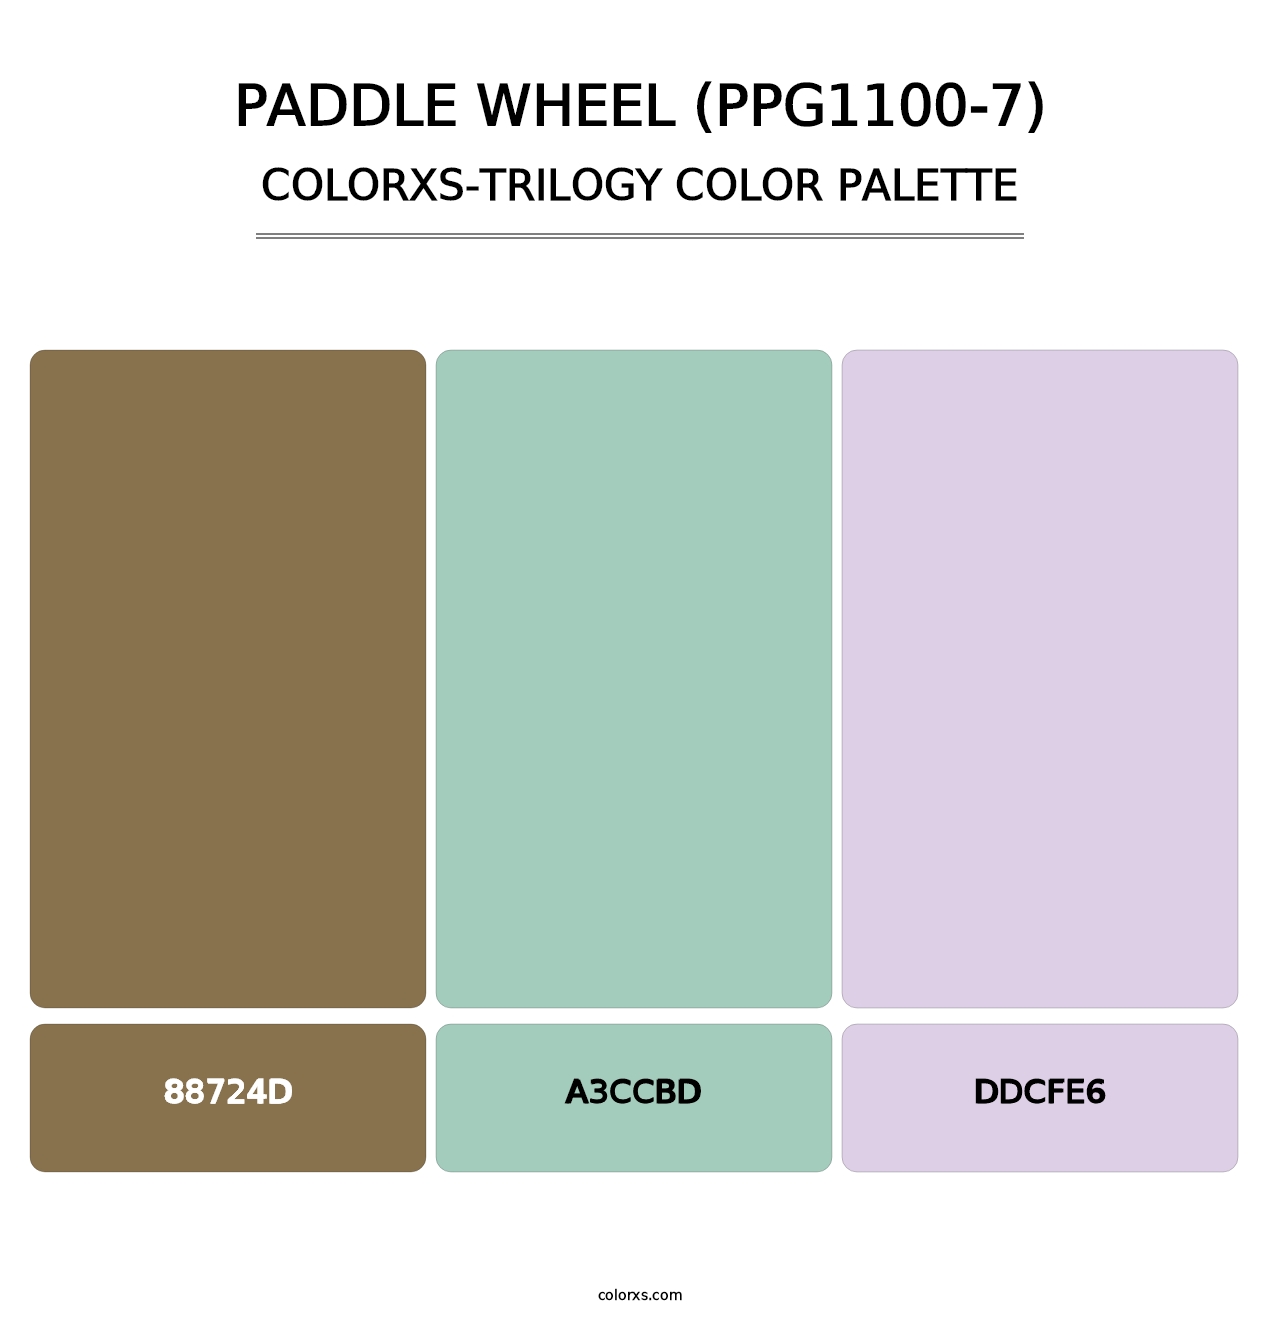 Paddle Wheel (PPG1100-7) - Colorxs Trilogy Palette